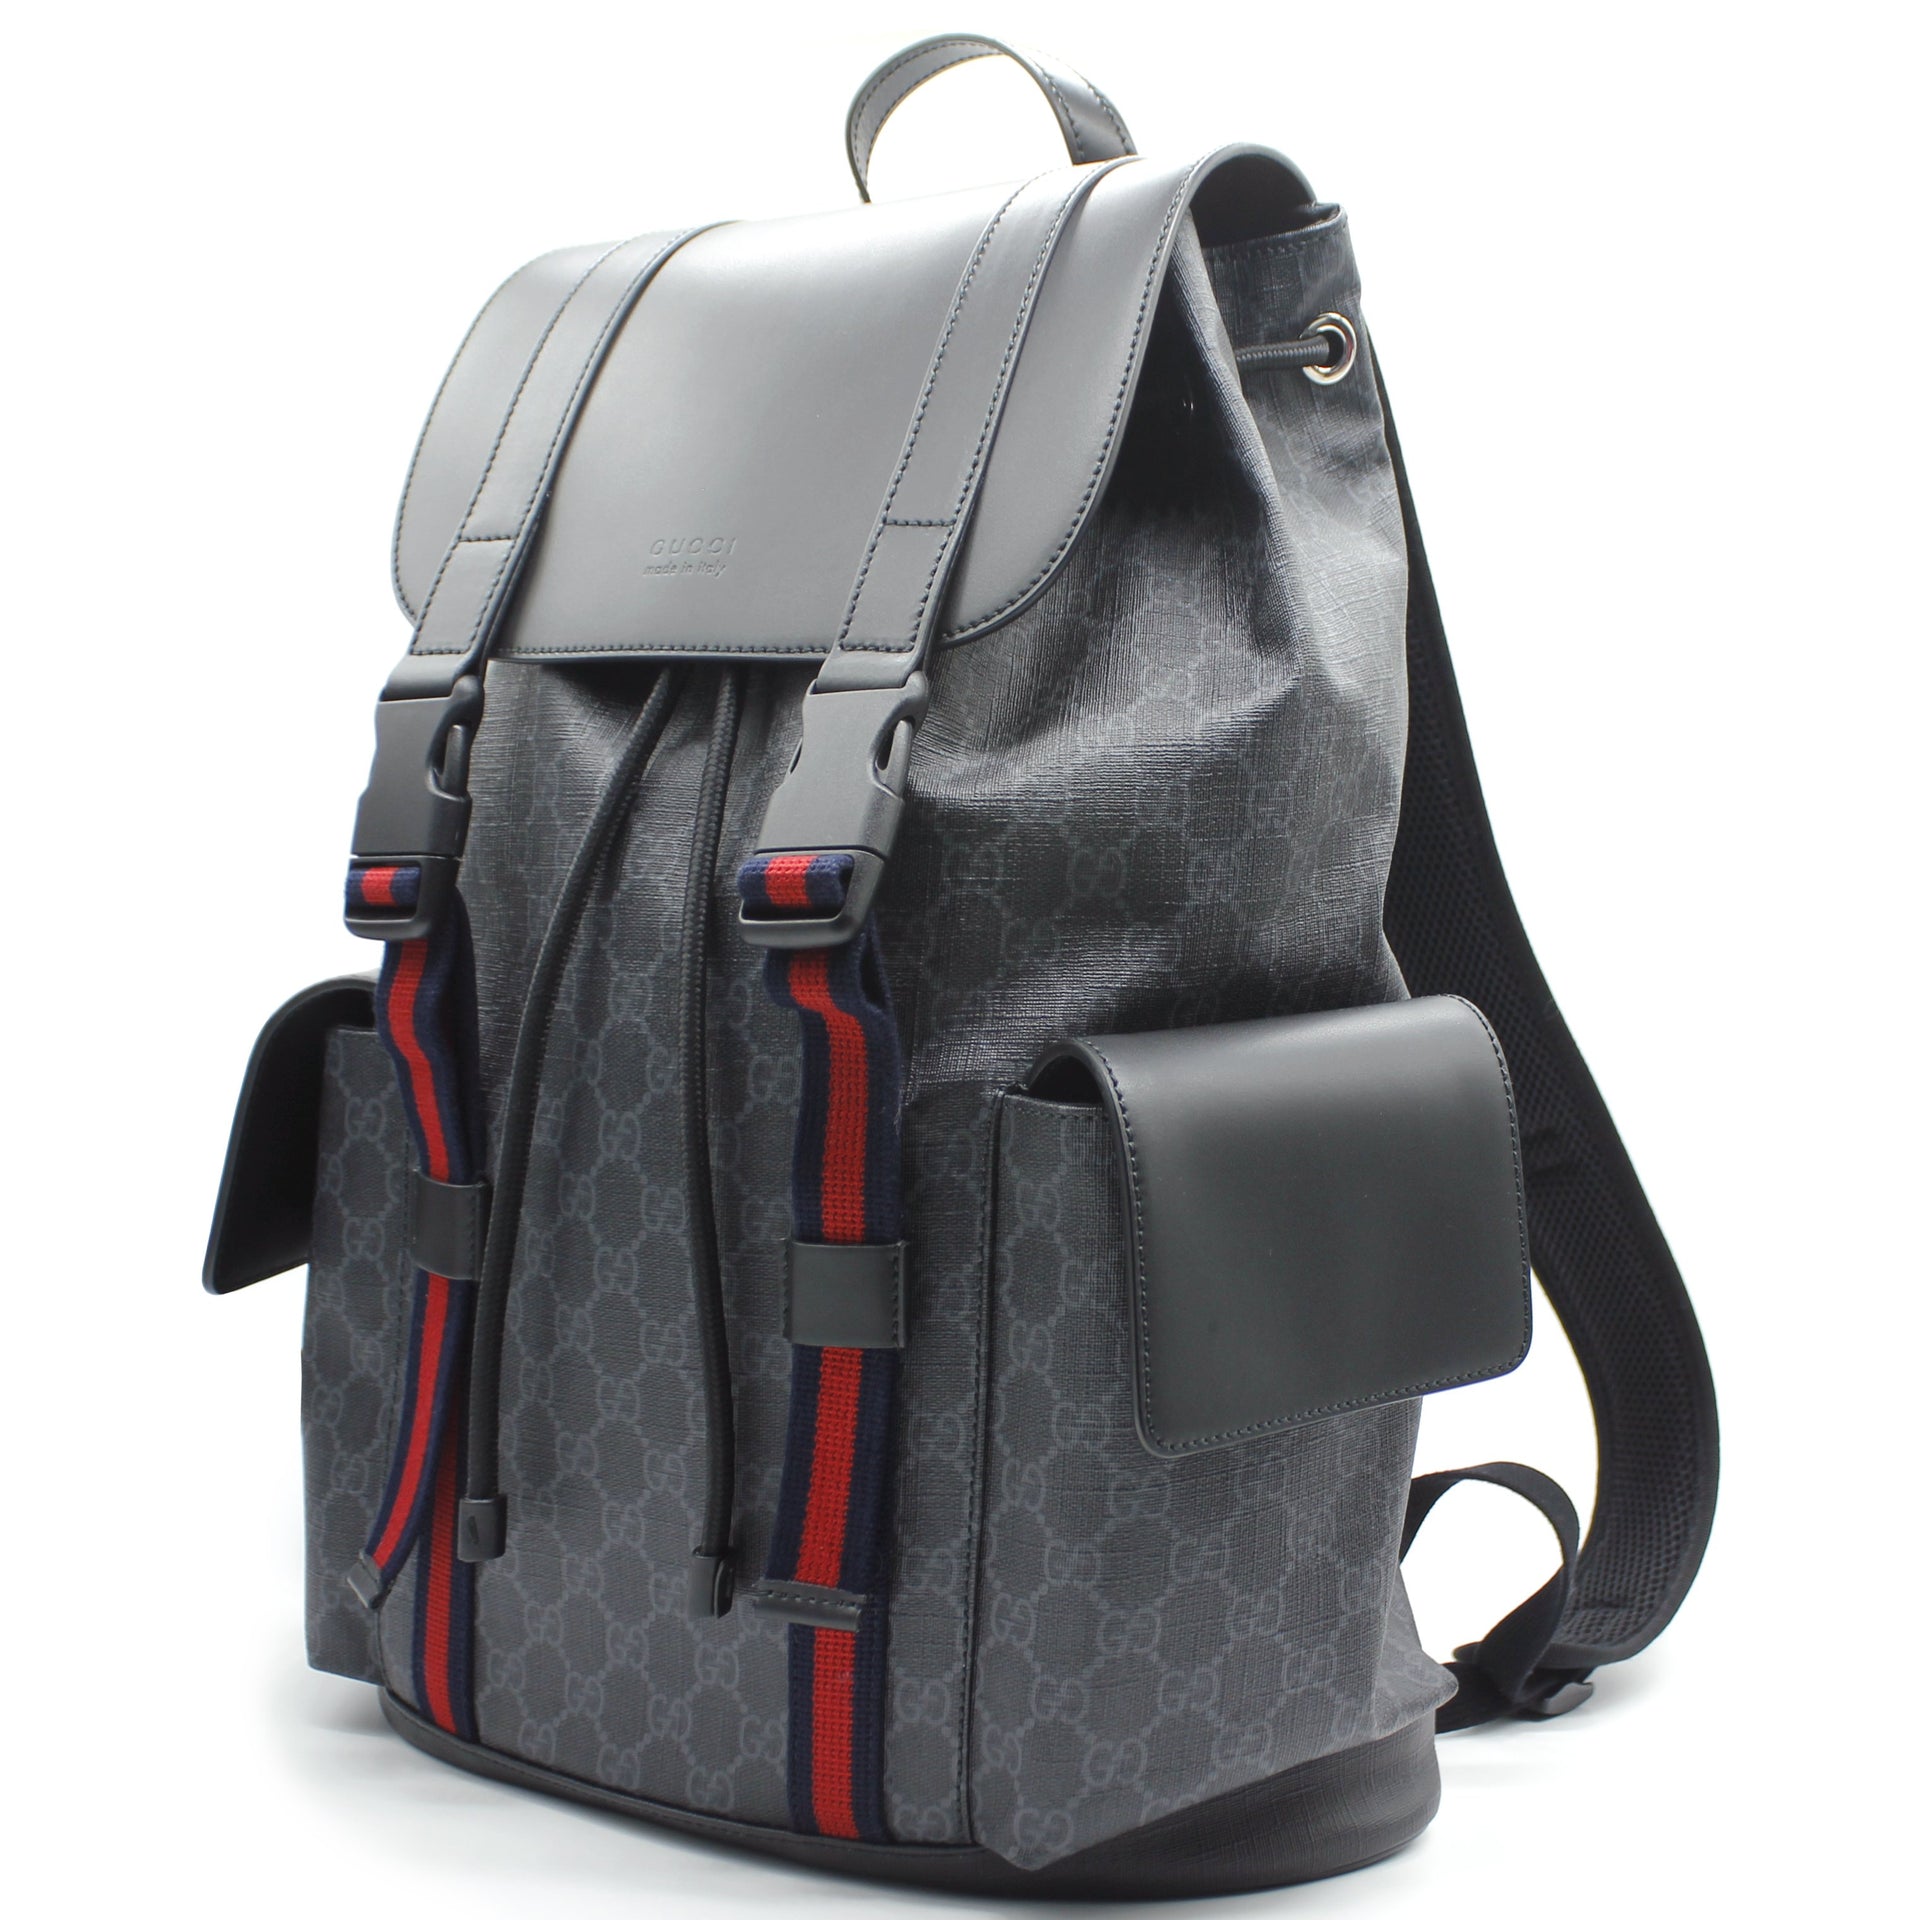 Gucci Soft GG Supreme backpack